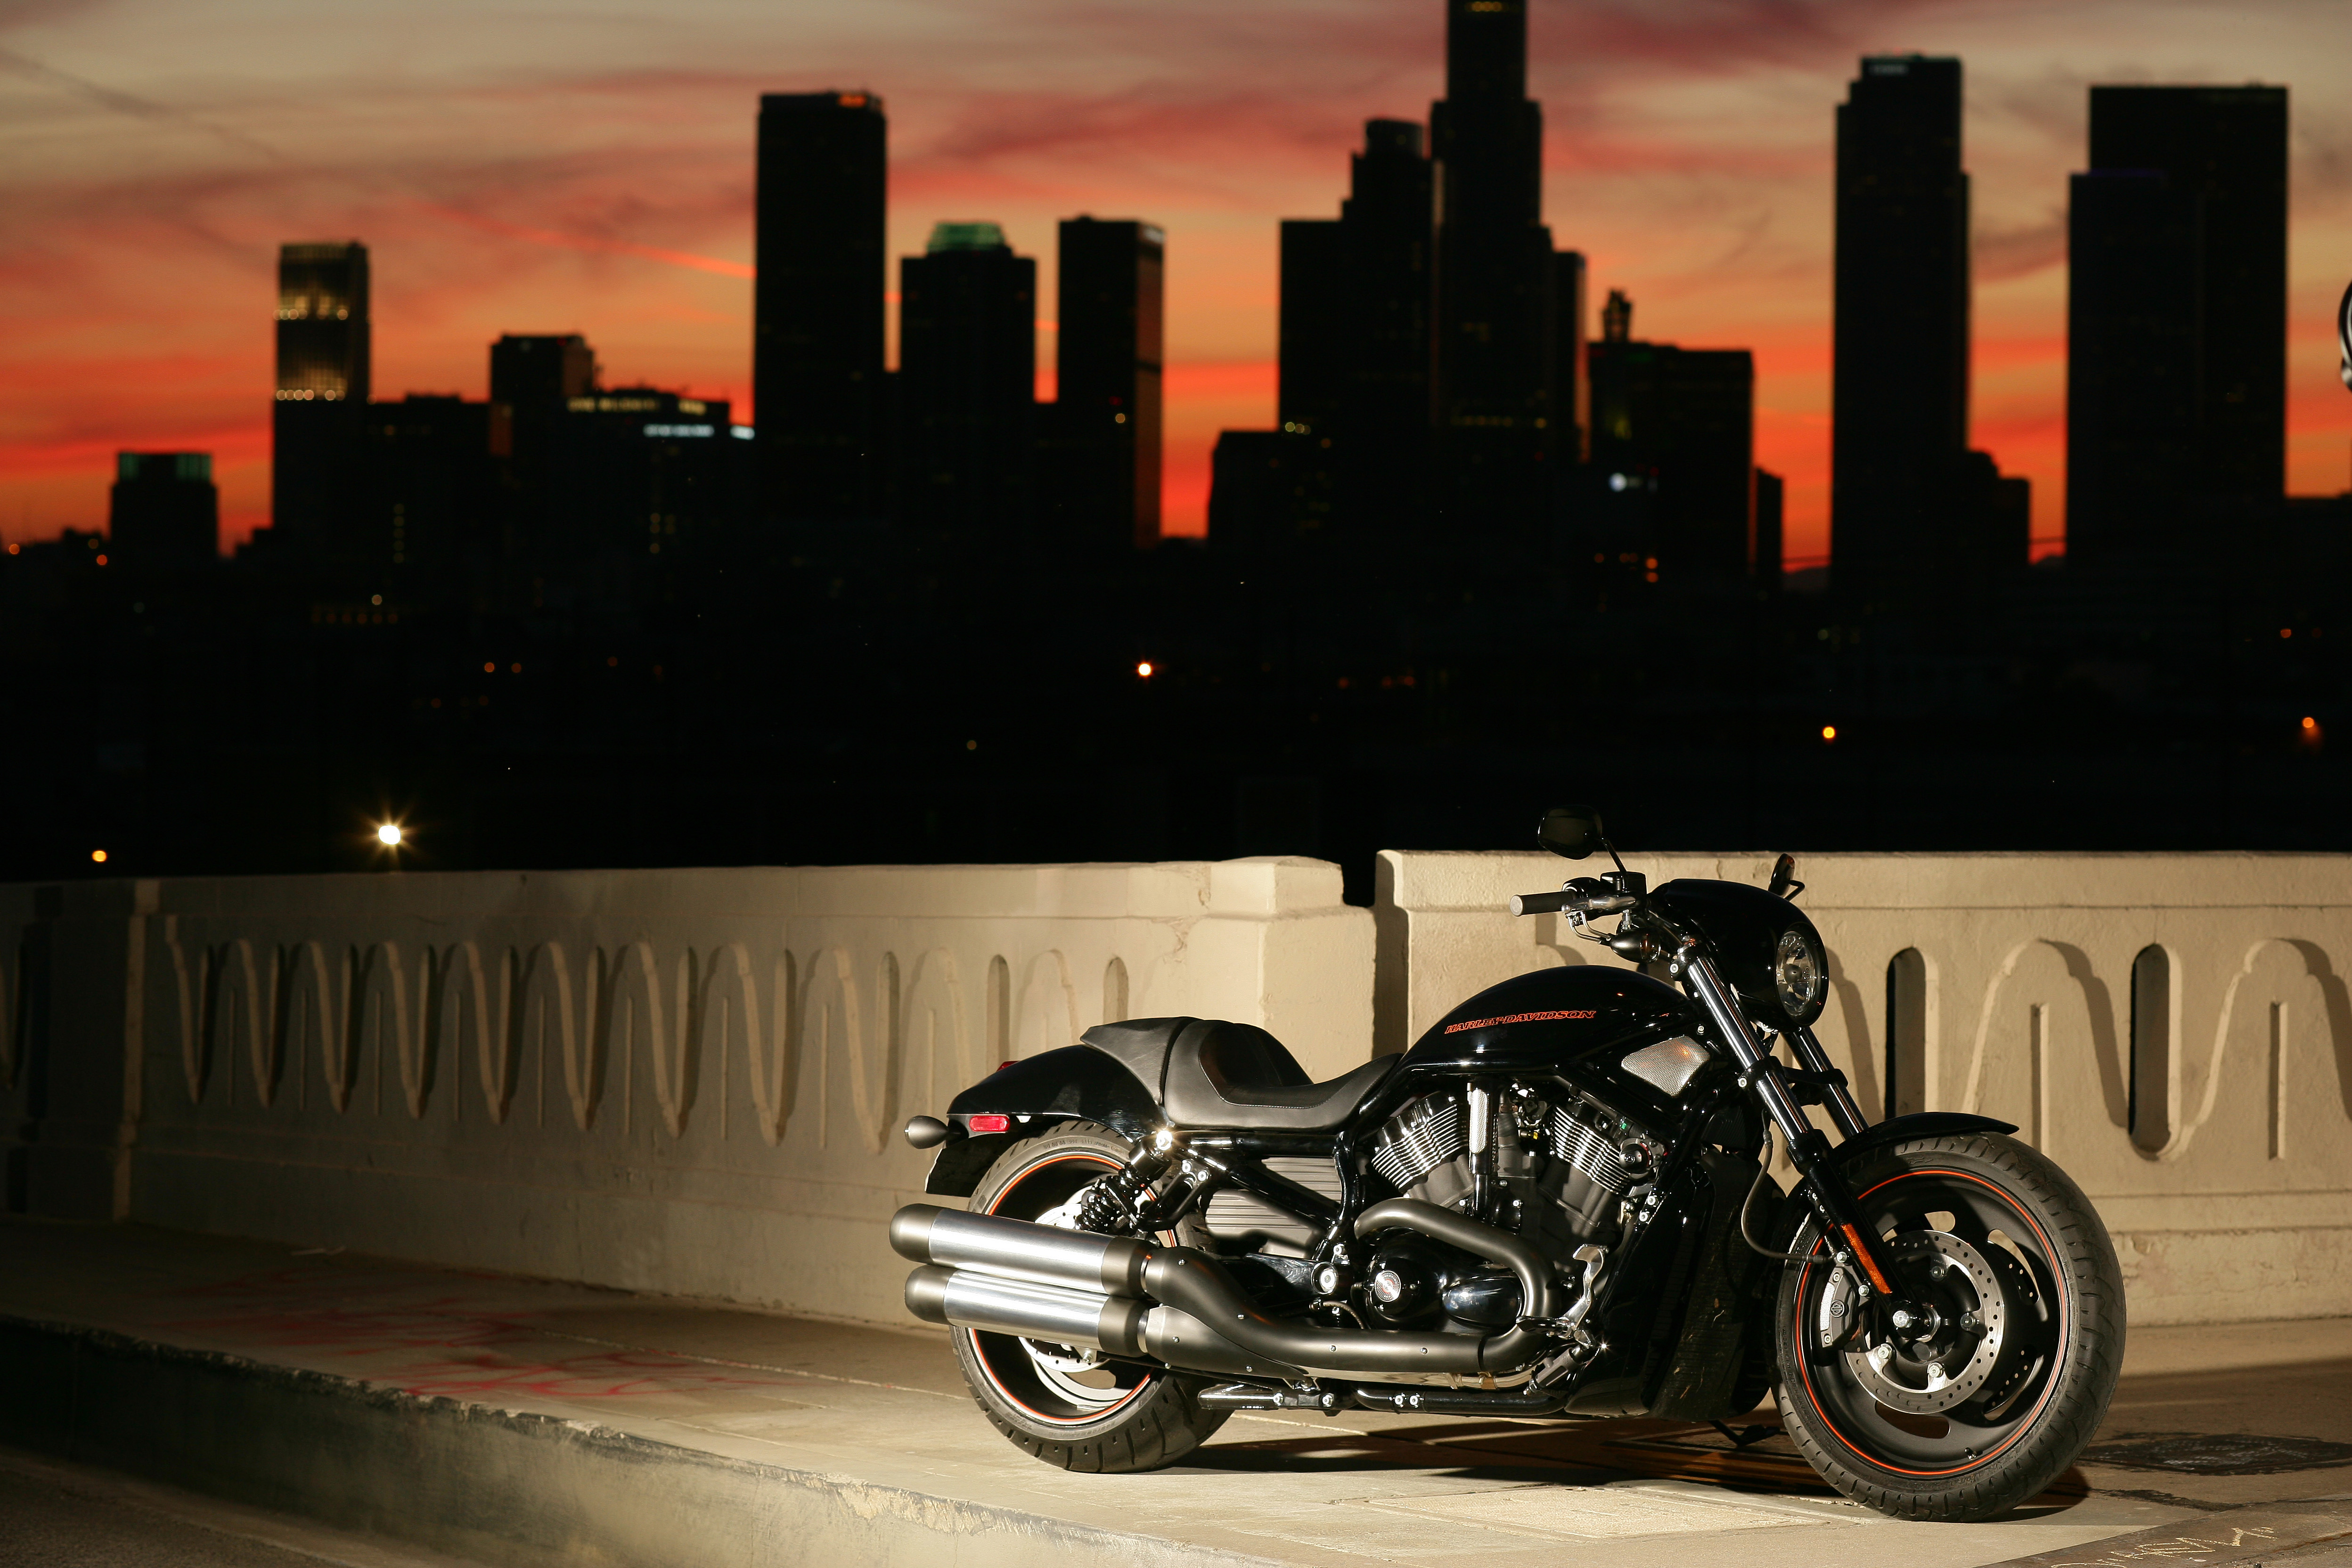 Harley davidson bikes wallpapers hd 2015 seventy two - churchmoli